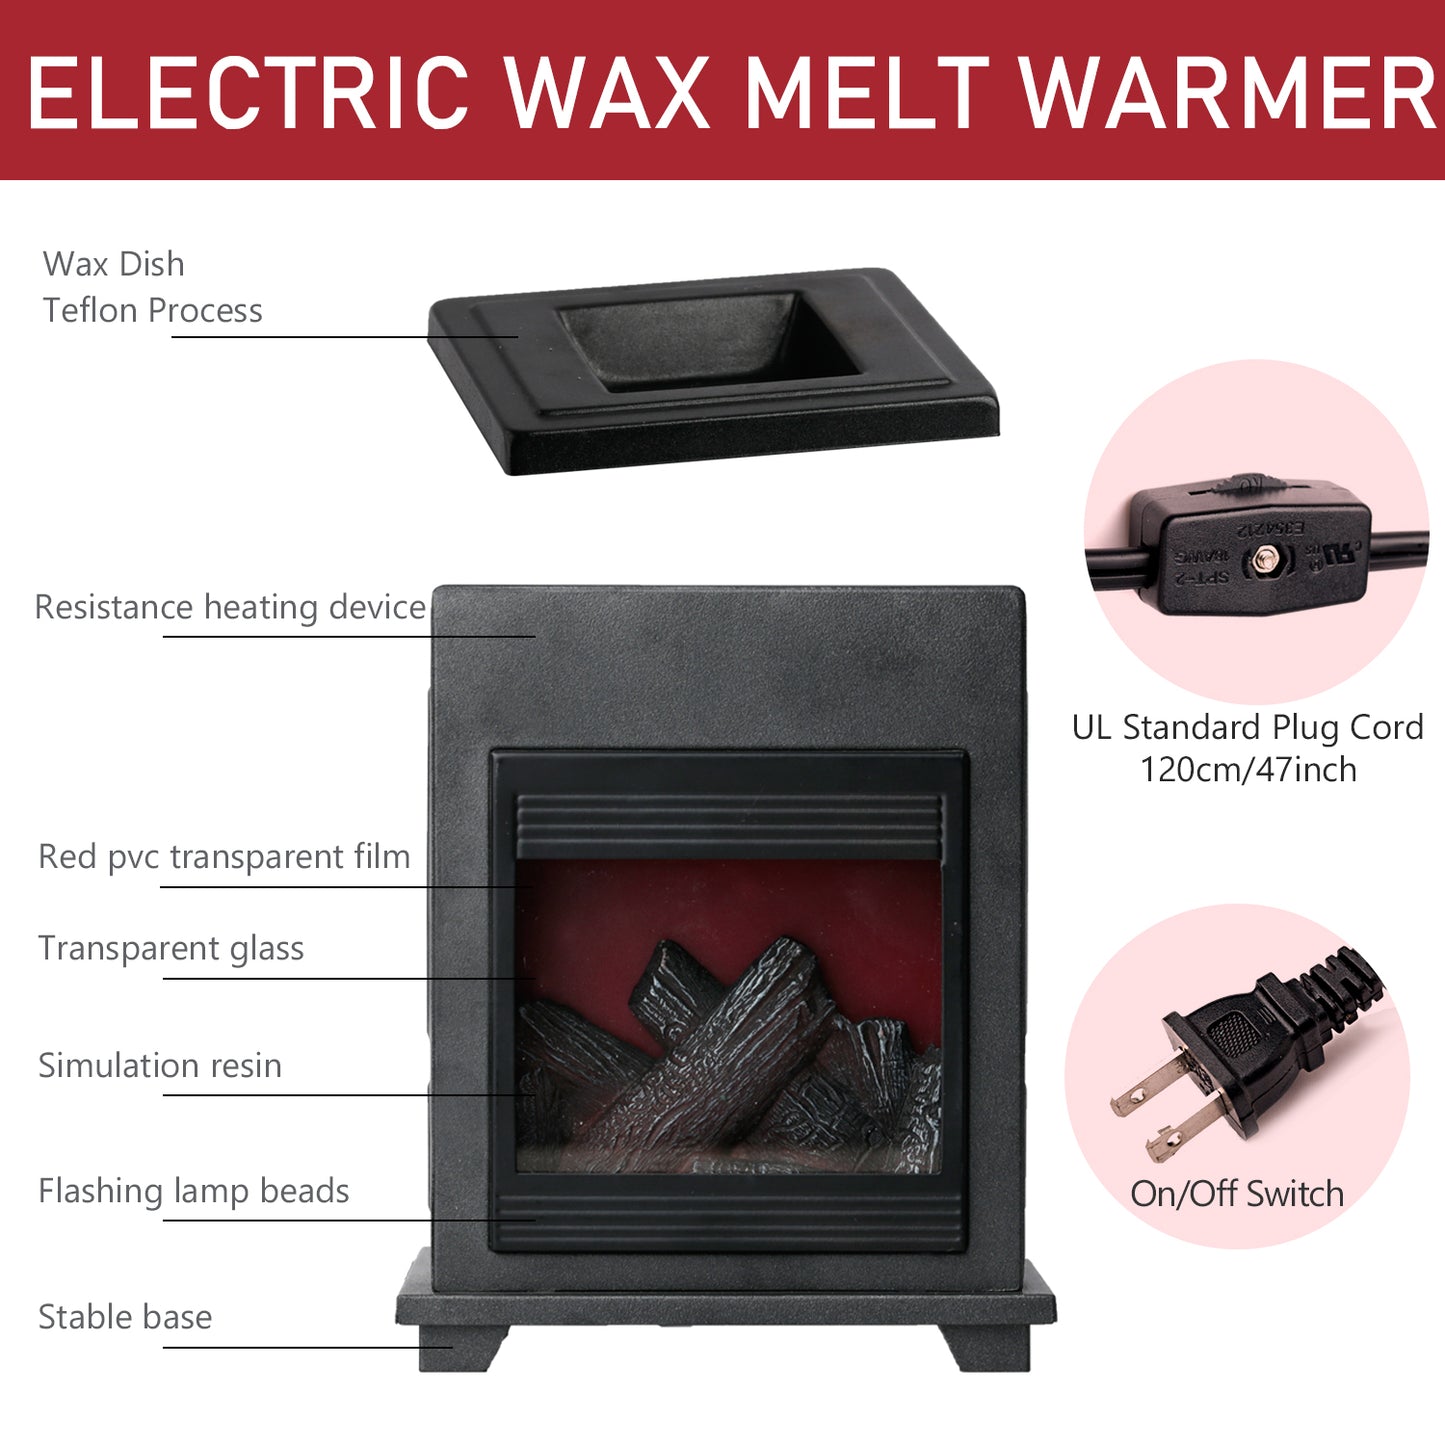 NAFANG Fireplace Wax Warmer,Wax Melt Warmer for Scented Wax Melts and Tarts,Electric Wax Warmer,Candle Wax Burner Fragrance Warmer for Home Decor